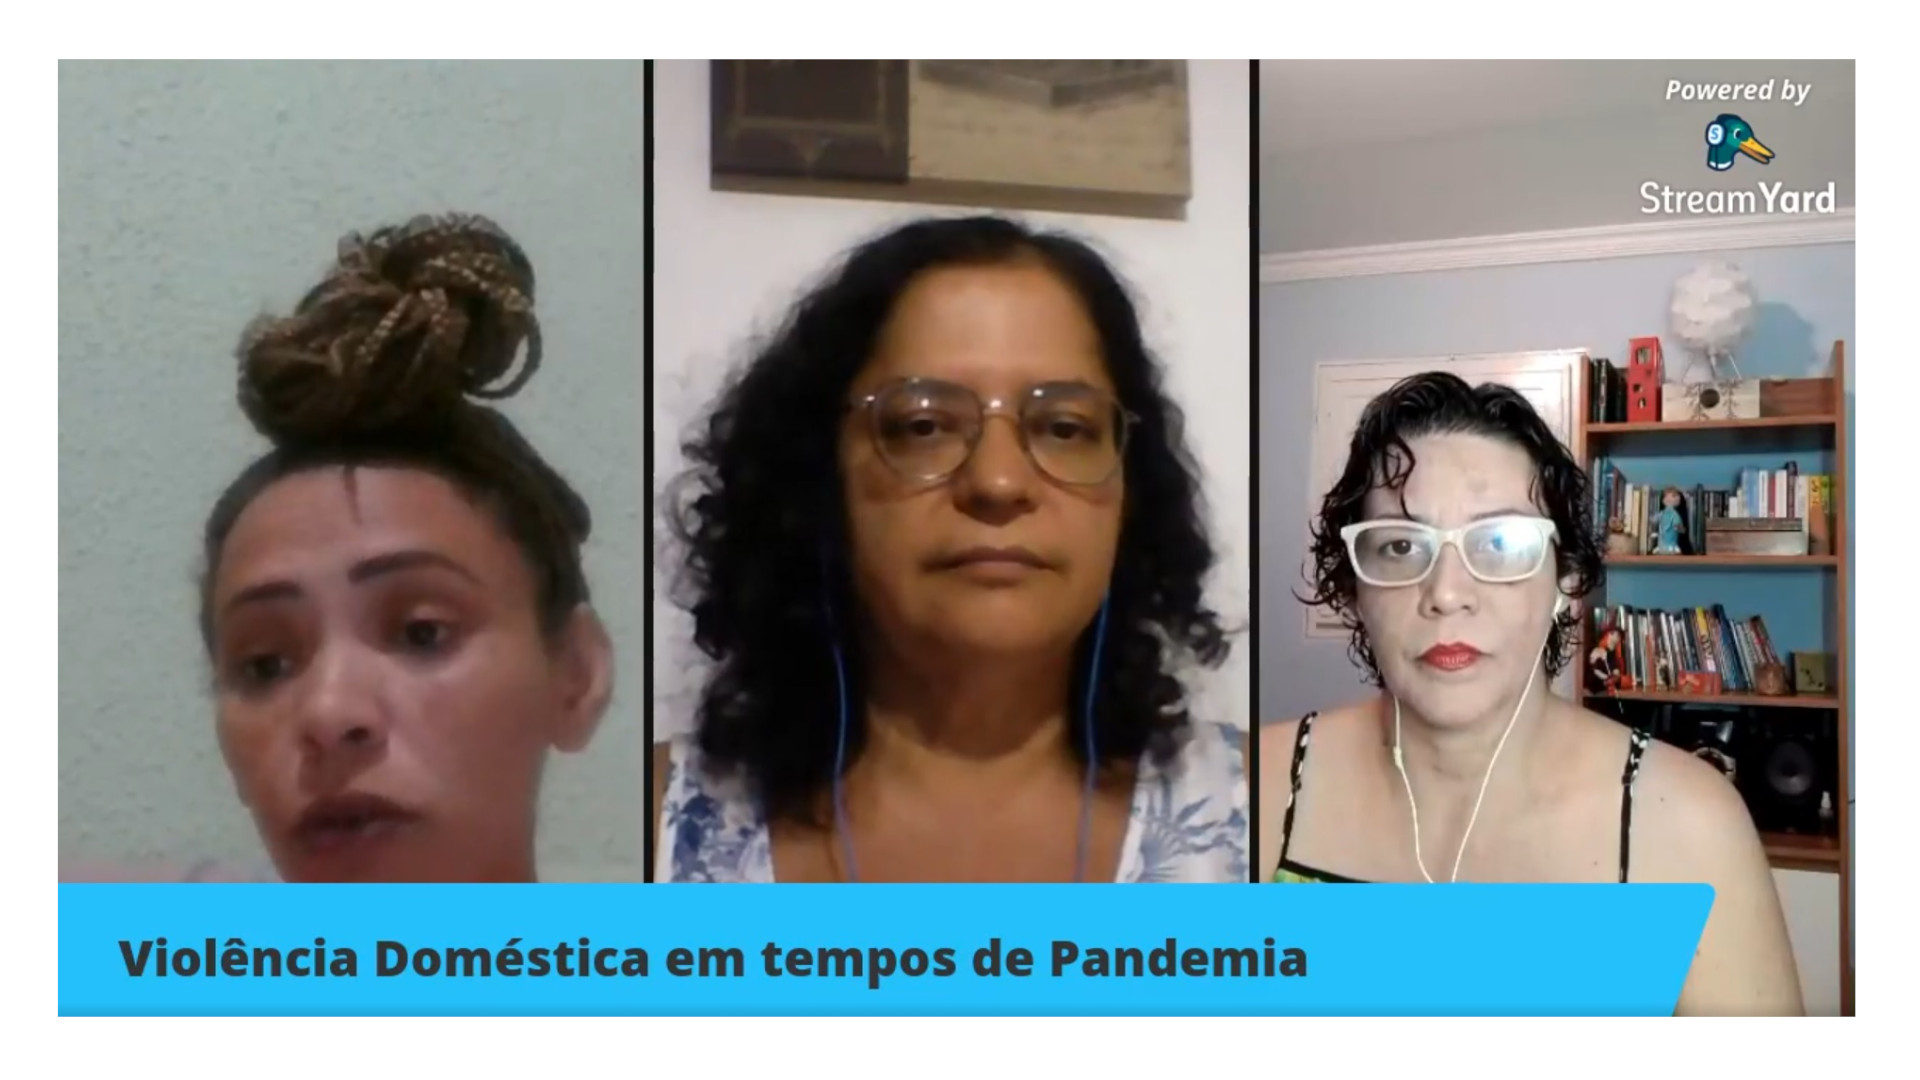 SOS Corpo participa de debate sobre violência doméstica em tempos de pandemia